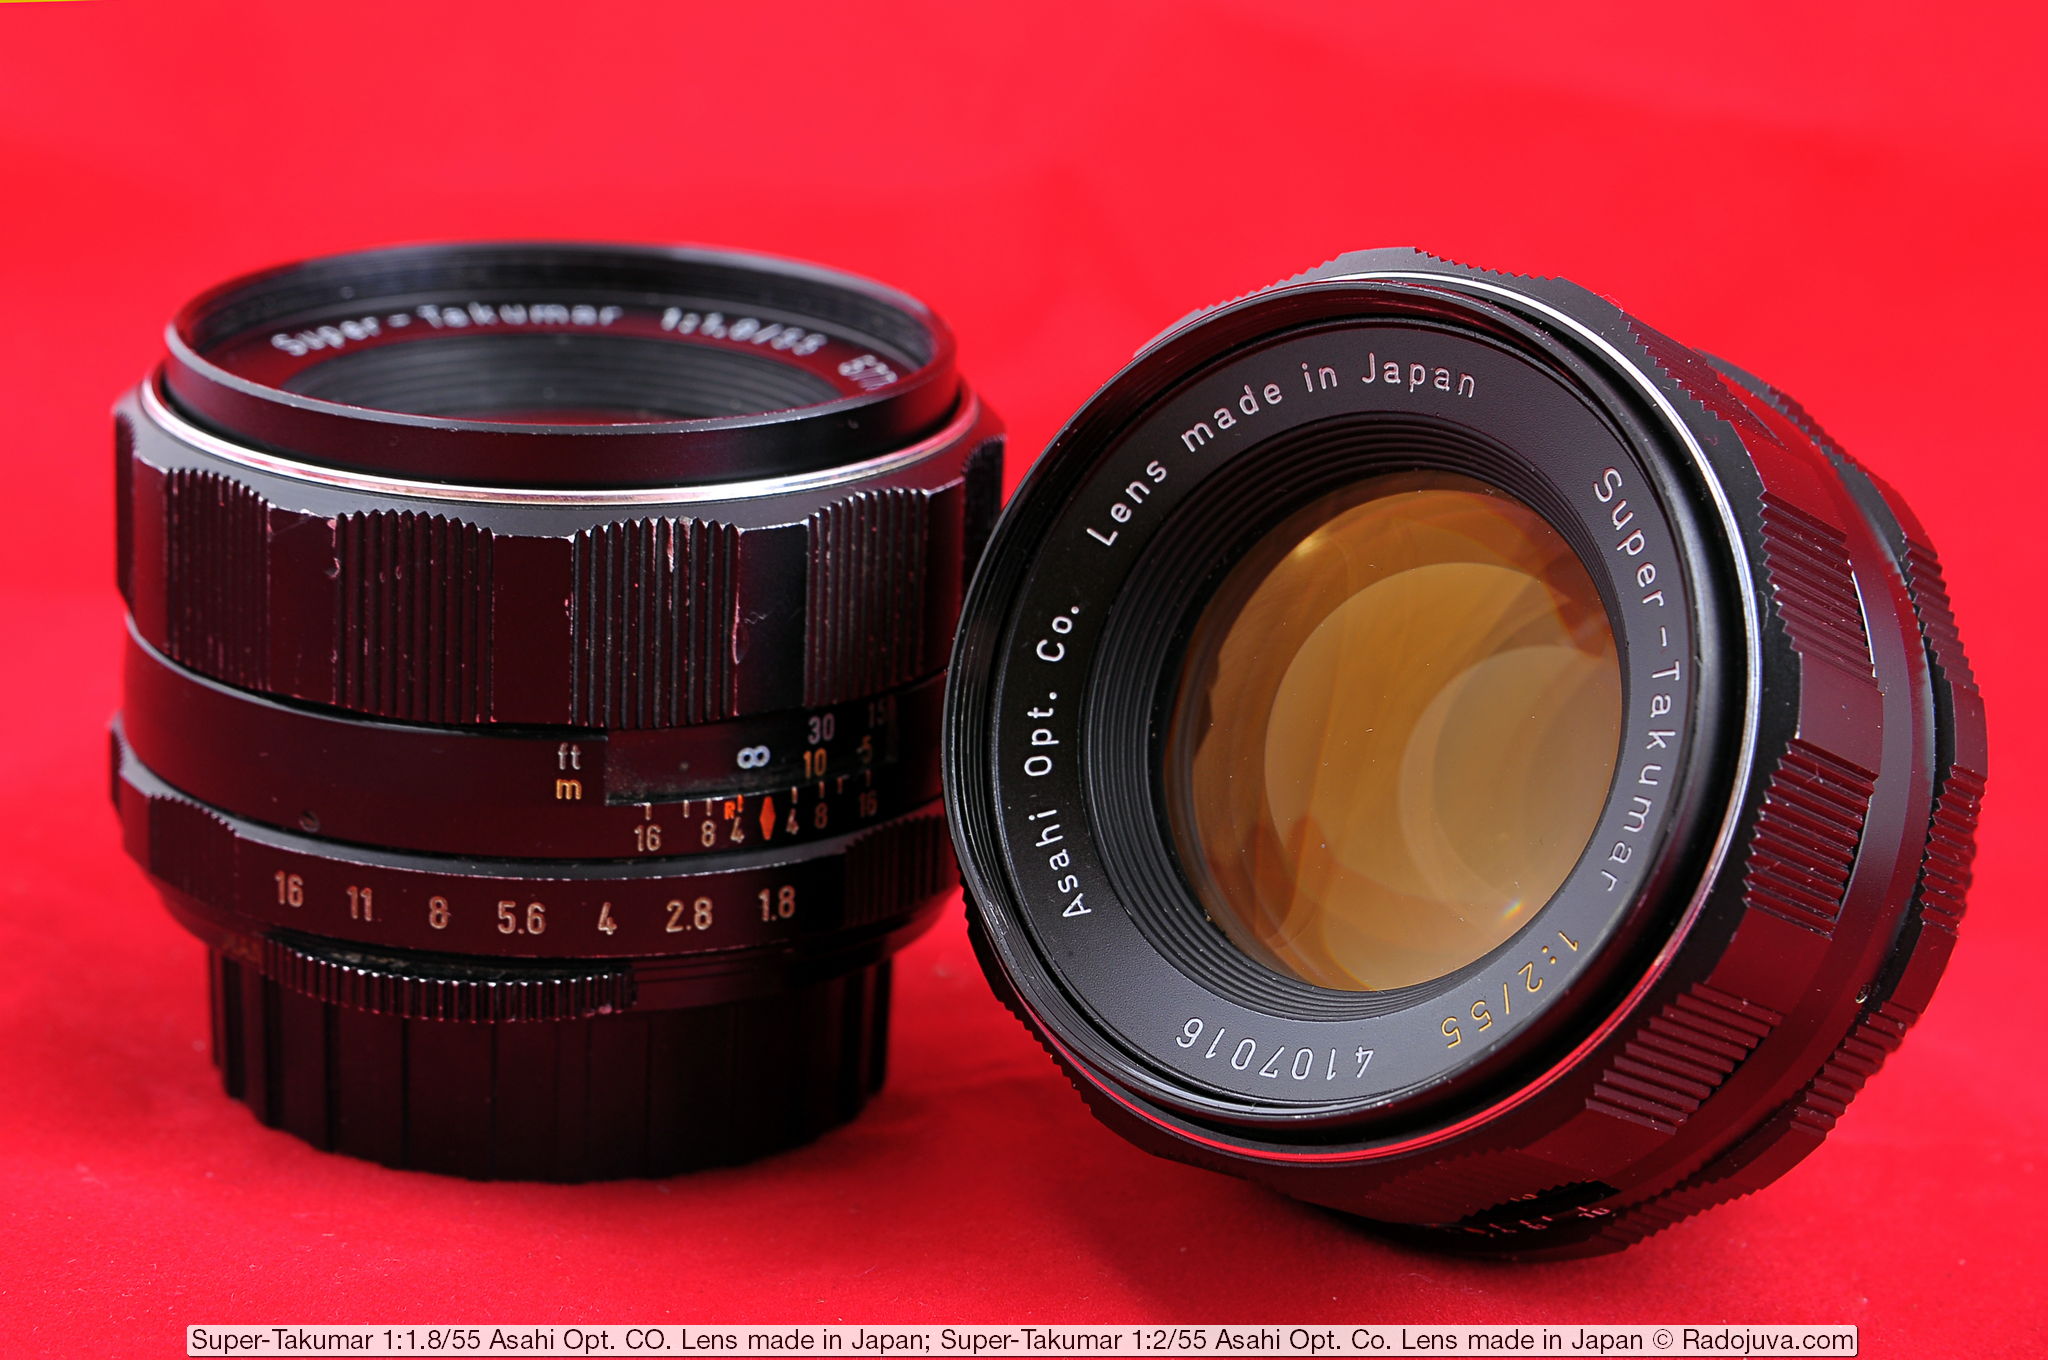 Объективы Super-Takumar 1:1.8/55 Asahi Opt. Co. Lens made in Japan и Super-Takumar 1:2/55 Asahi Opt. Co. Lens made in Japan